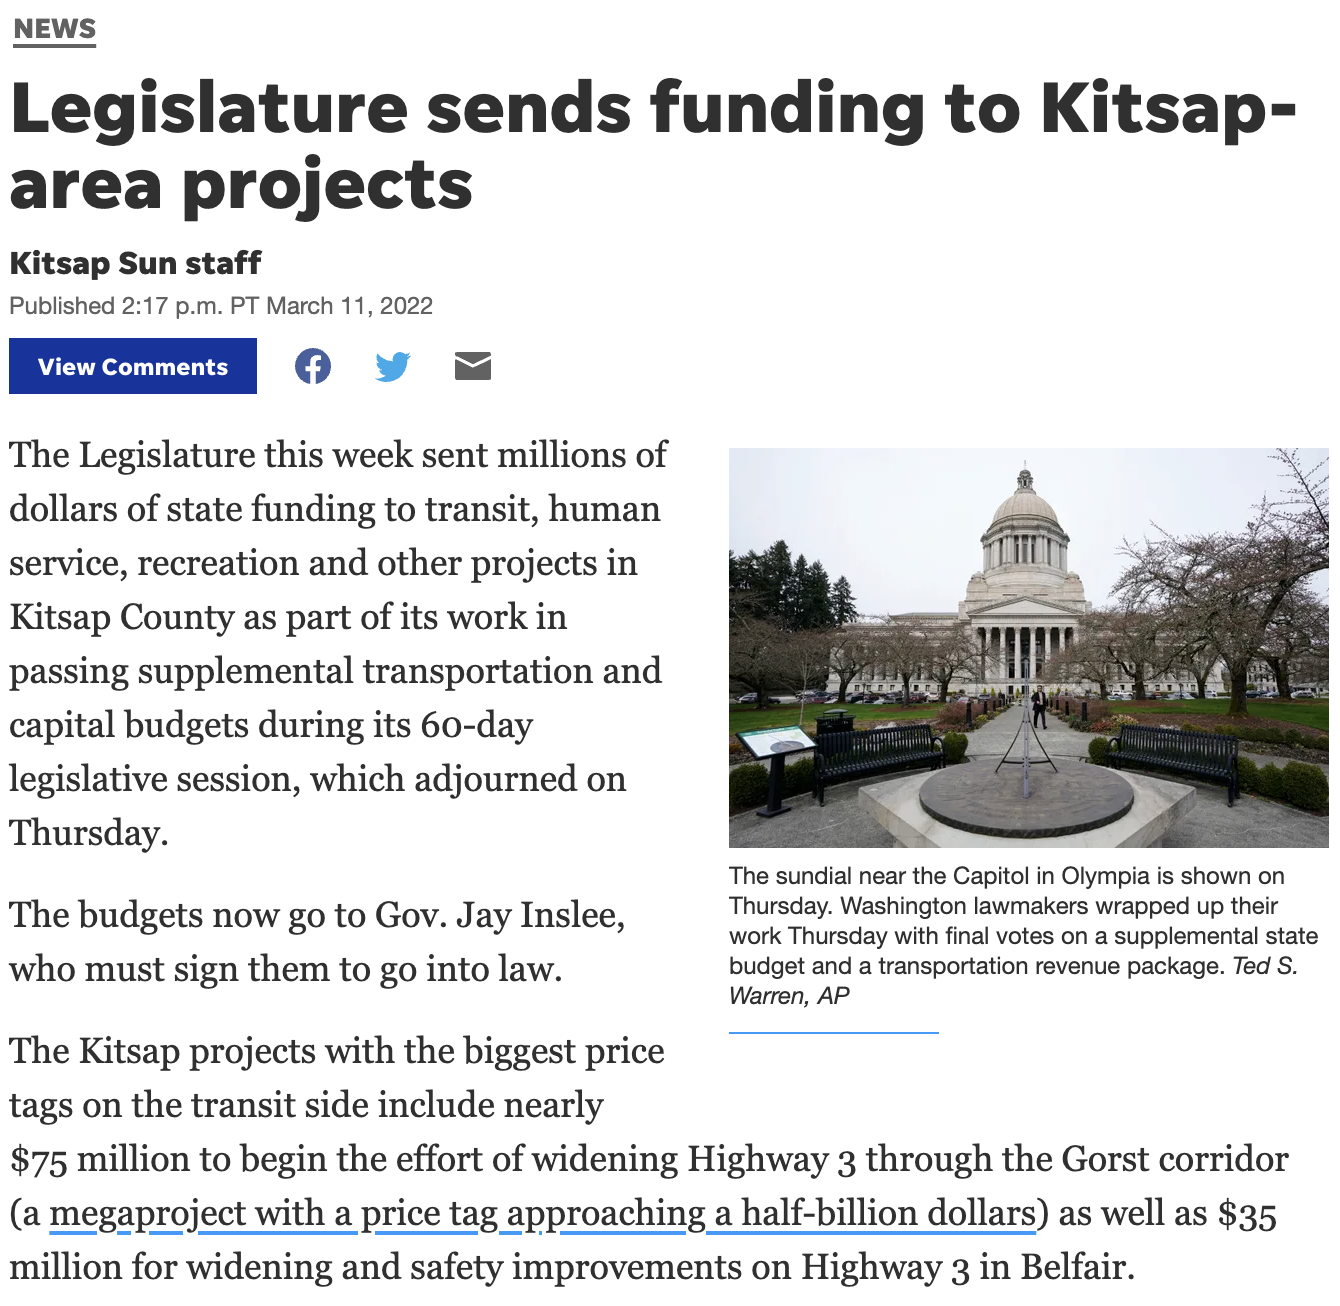 Kitsap Sun - "Legislature sends funding to Kitsap-area projects"